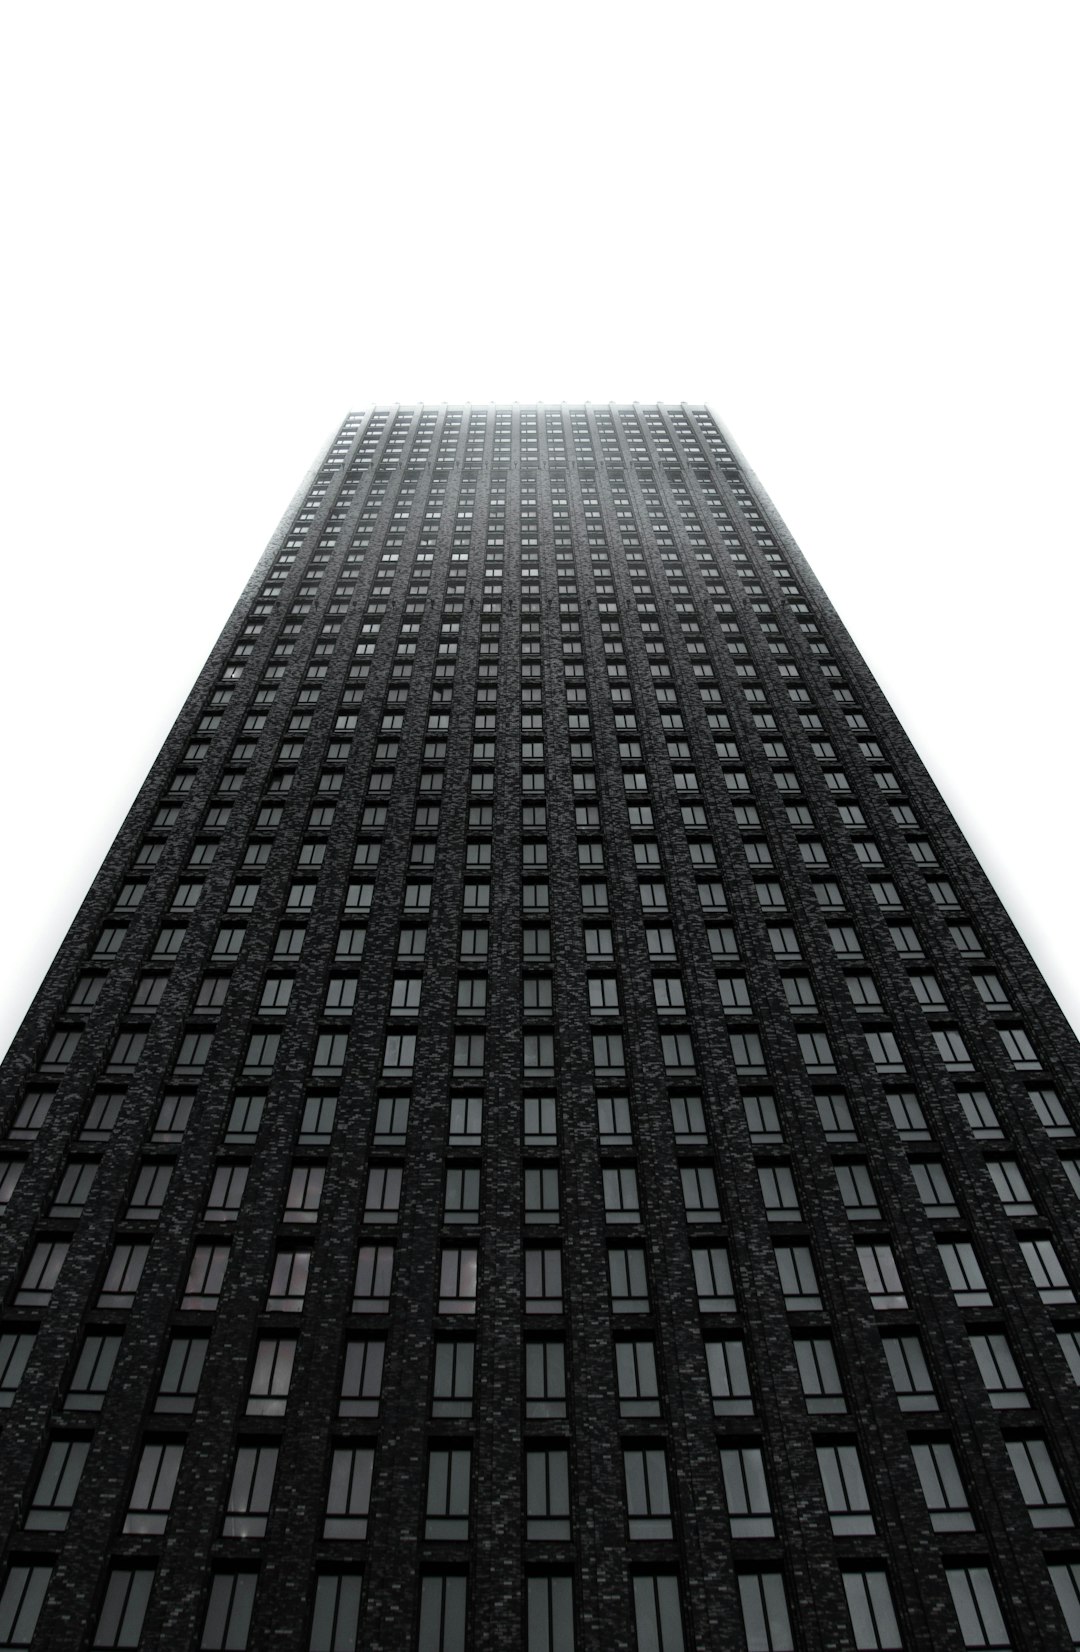 black high-rise building